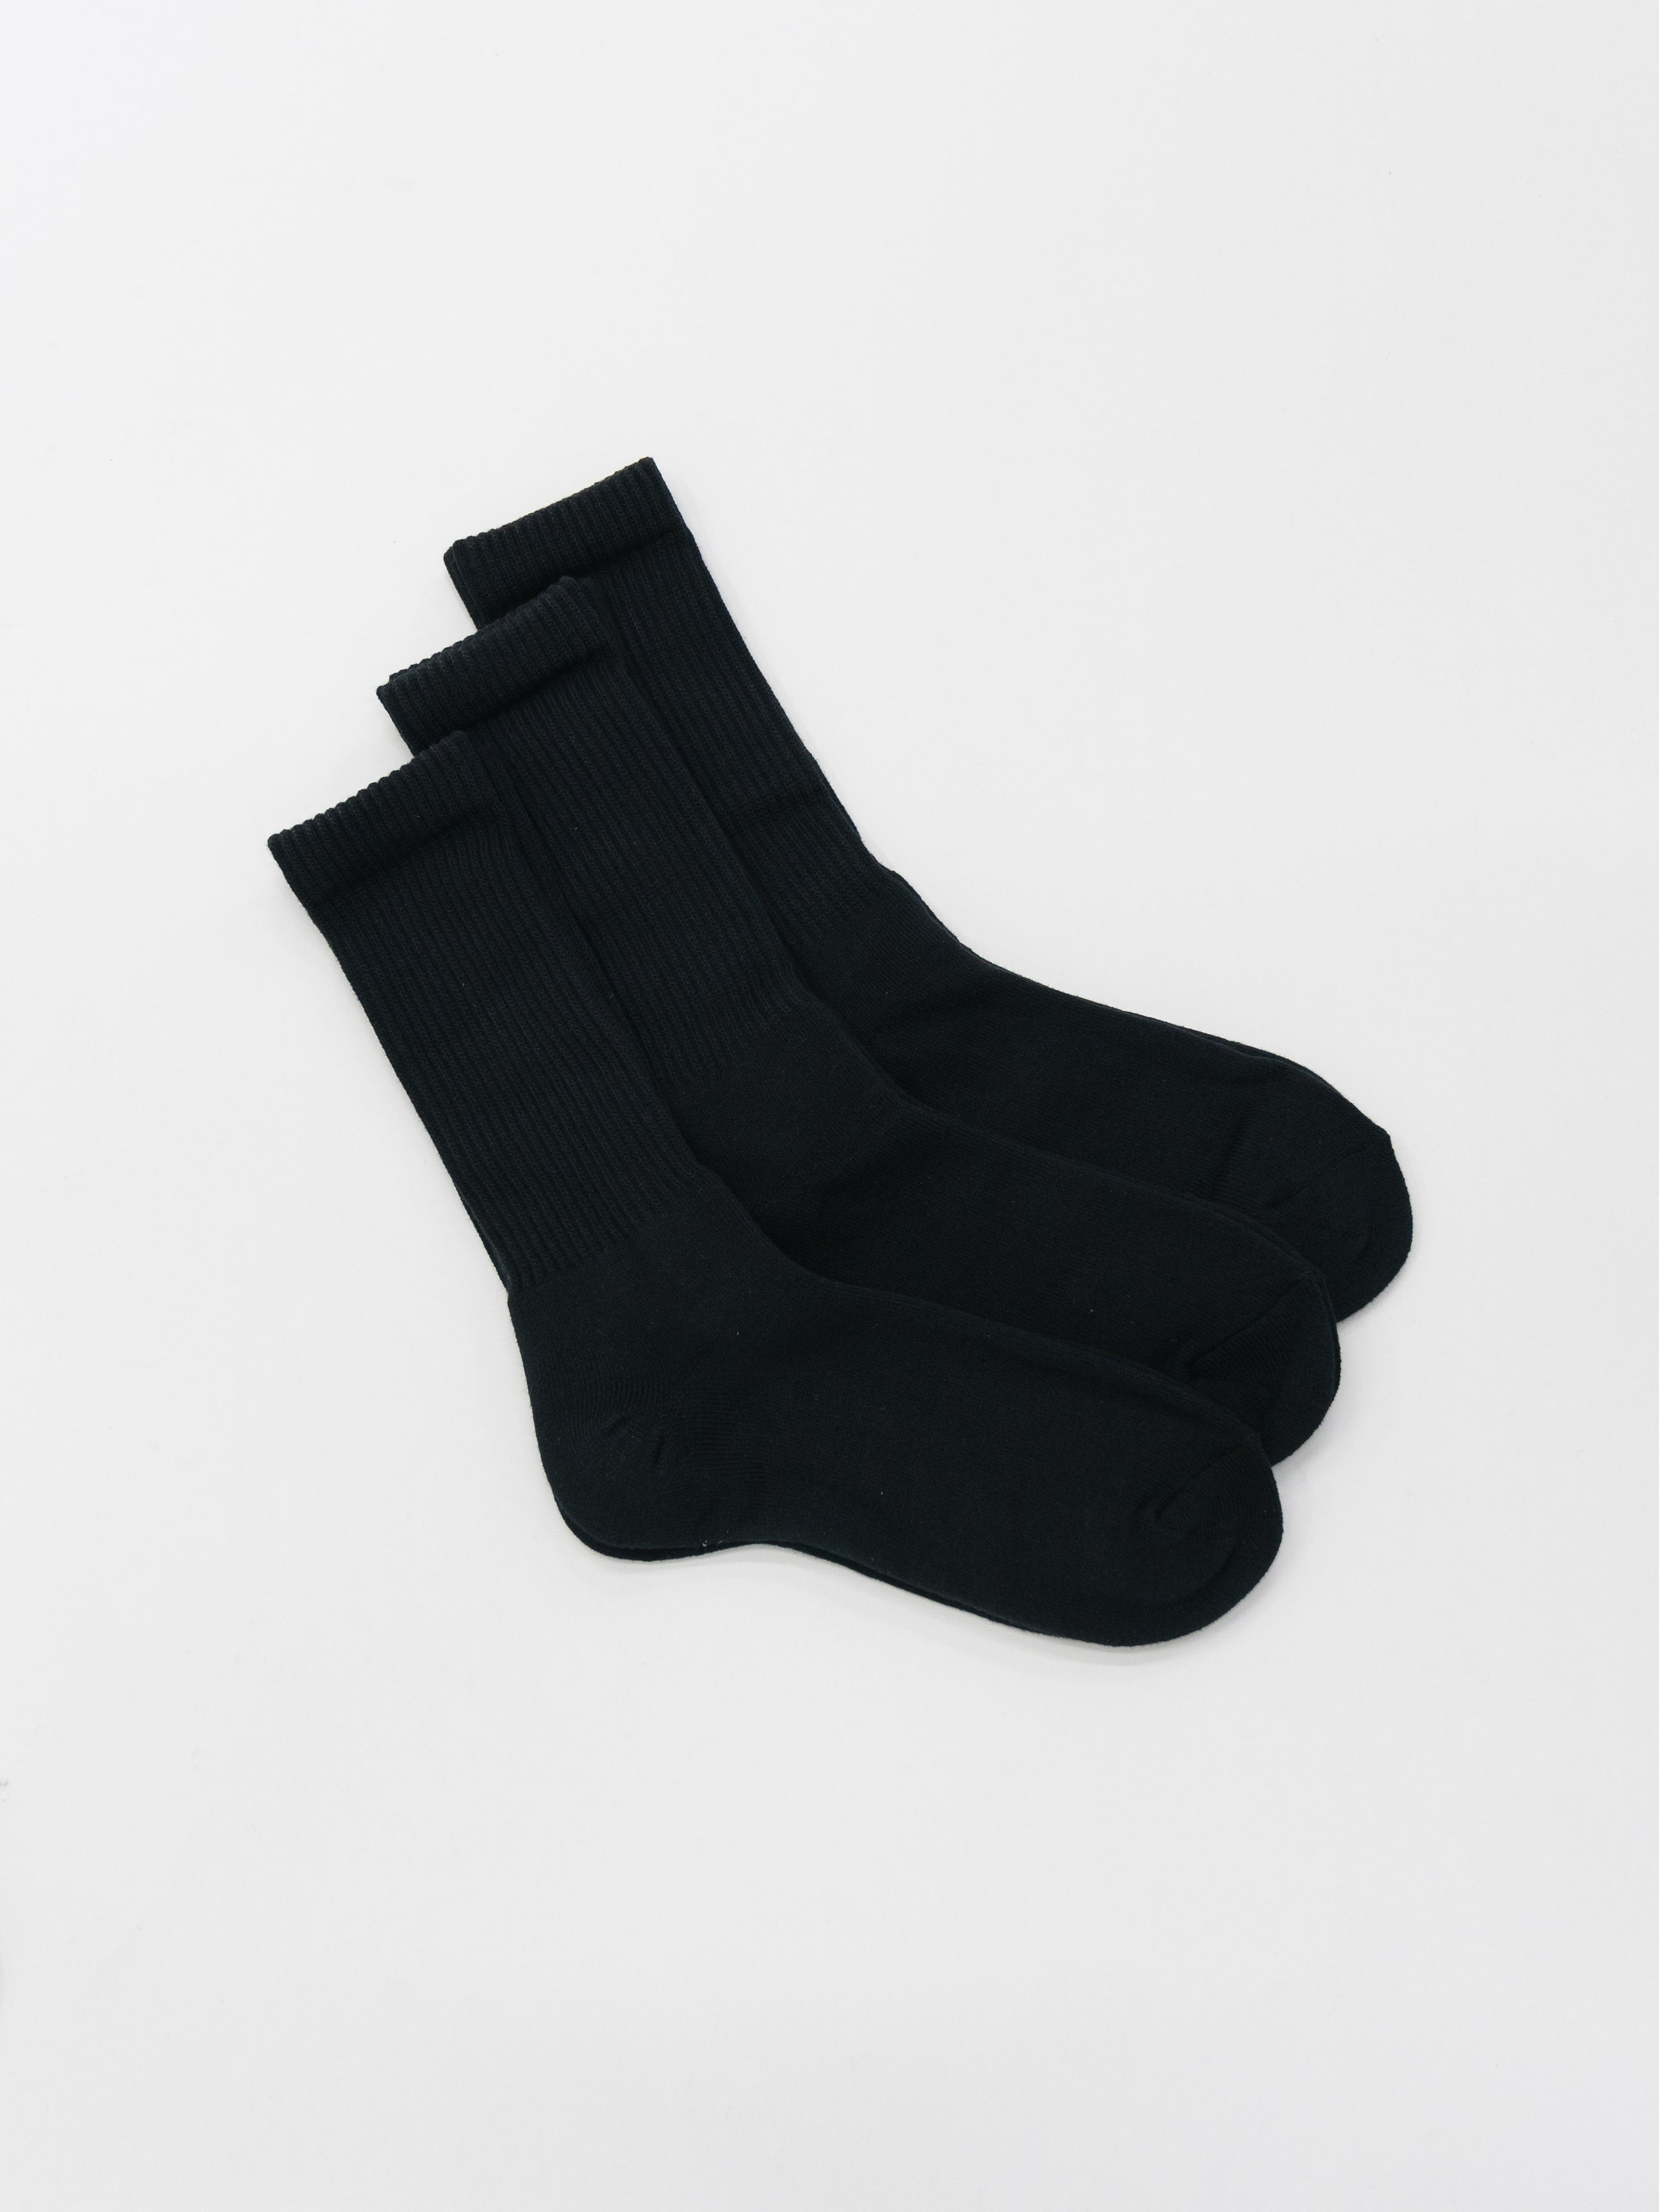 FreshService Original 3-Pack Socks (Black)